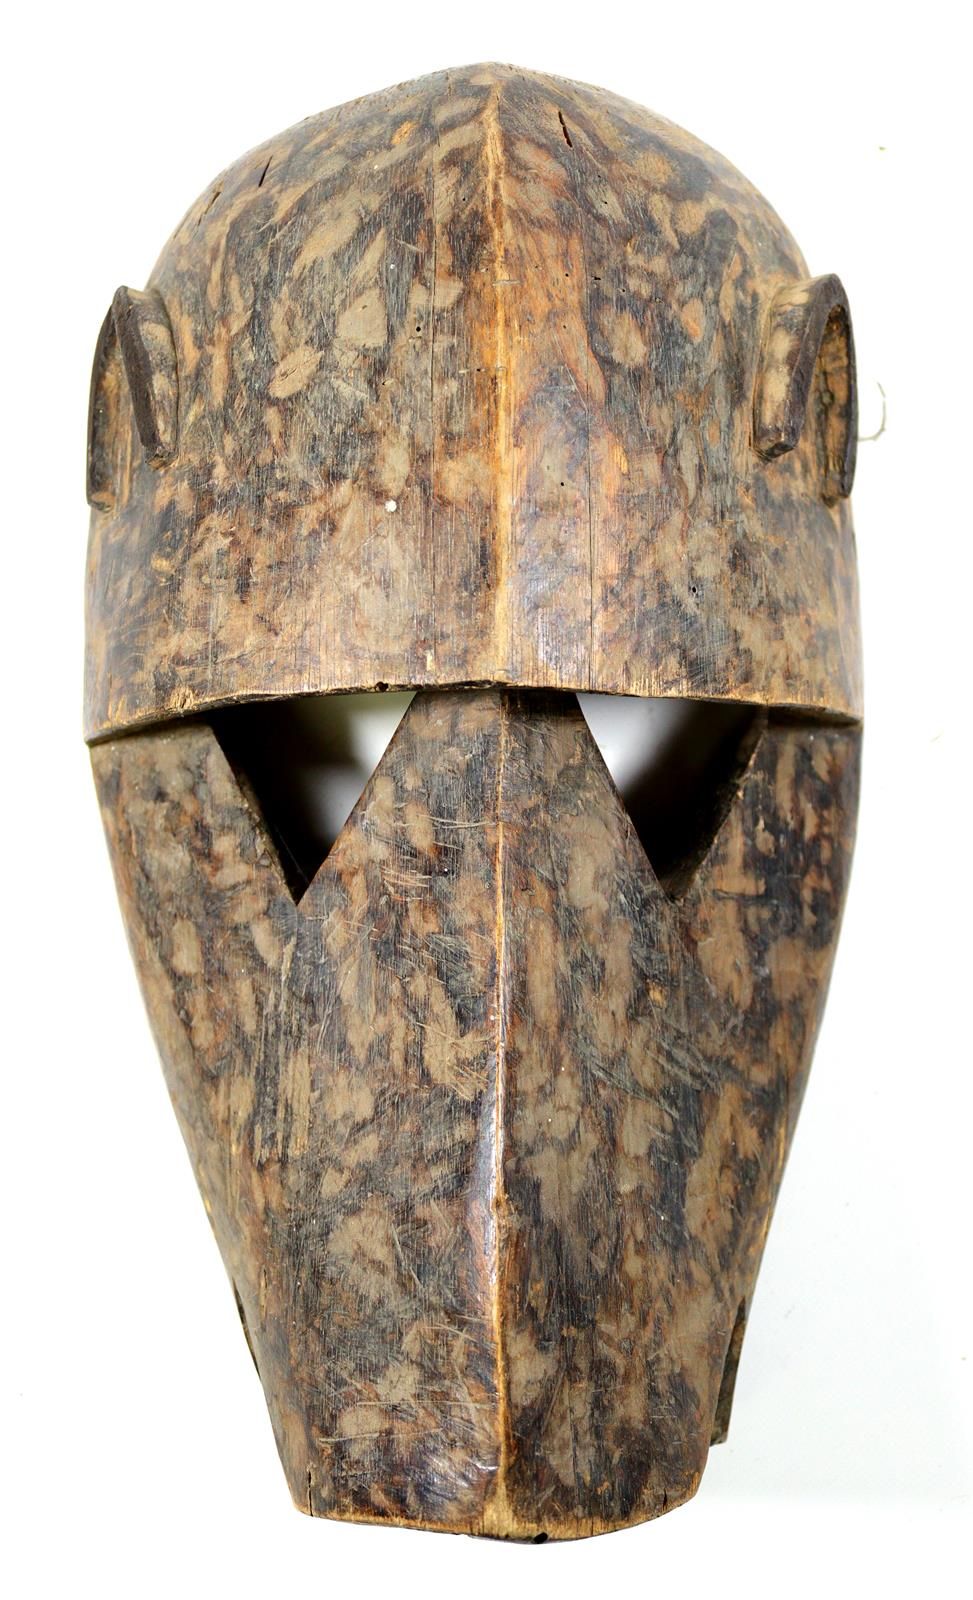 Dogon, Mali. 猴子面具。面具上有大额头和拉长的嘴。三角形的眼睛形状。41厘米。轻微损坏。规定：来自萨尔茨堡的艺术贸易。 D